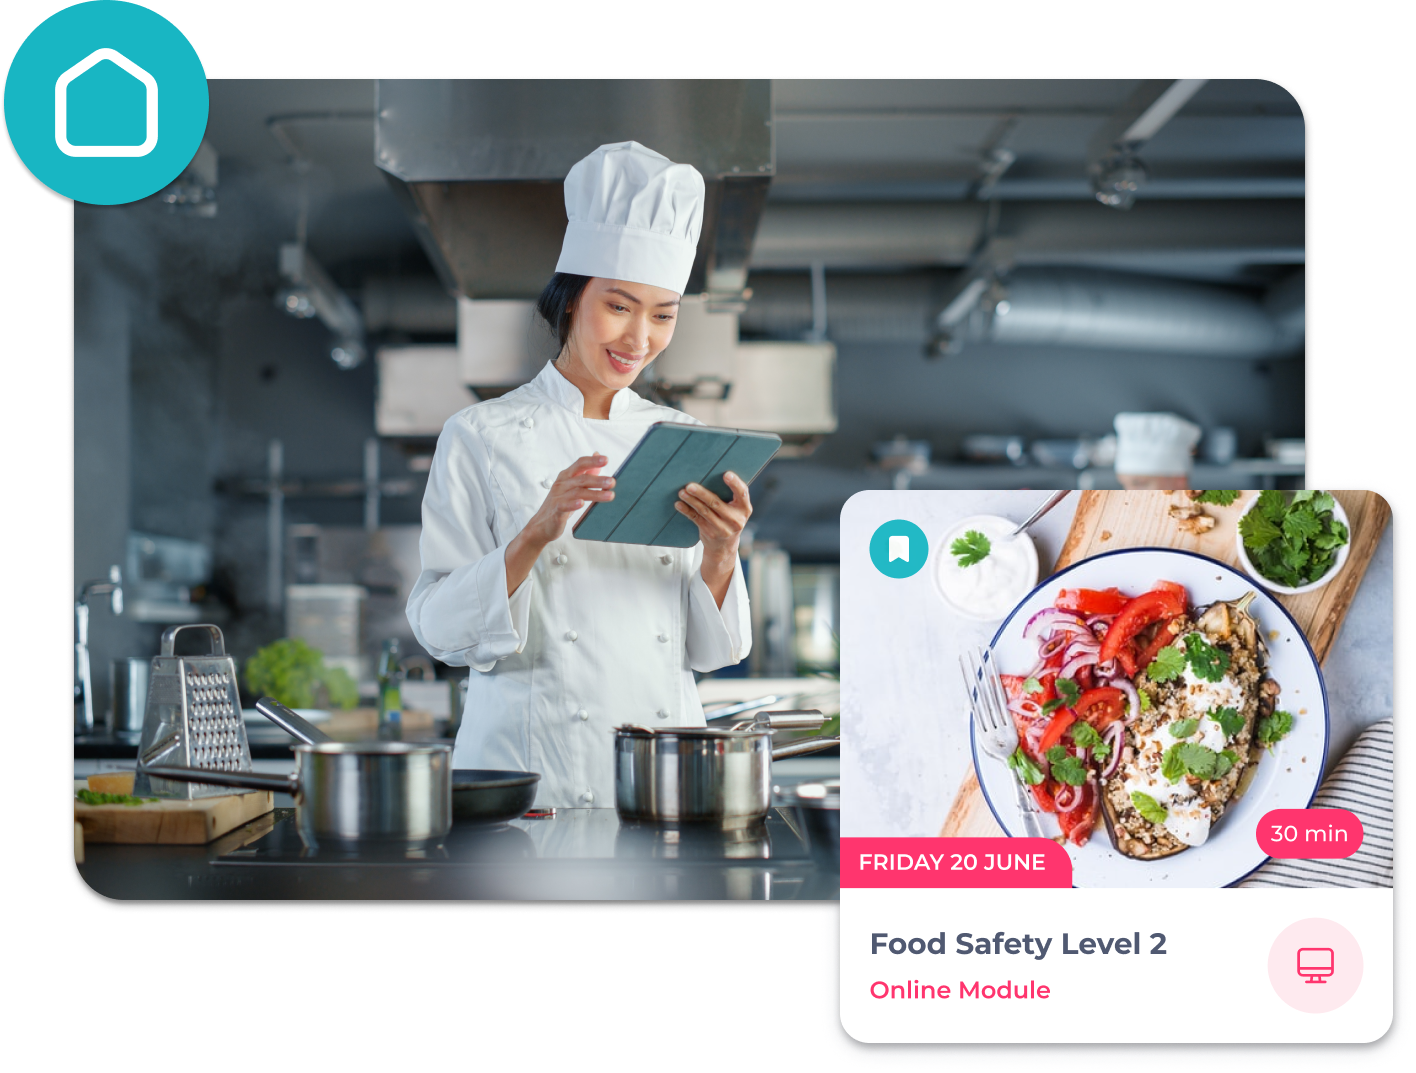 Online restaurant learning platform